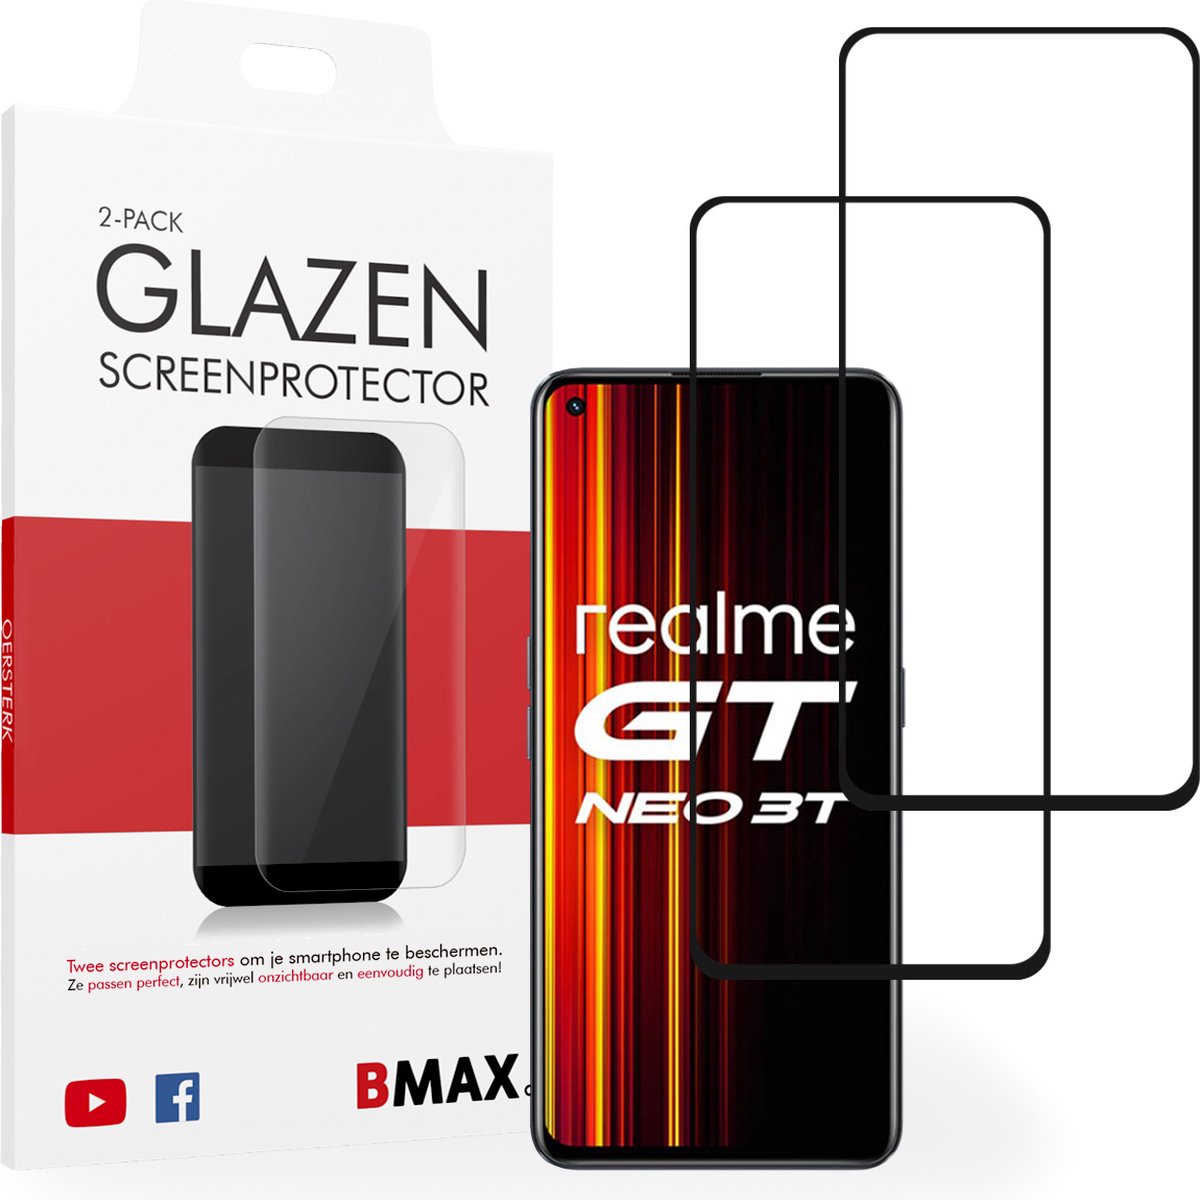 2-pack BMAX geschikt voor Realme GT Neo 3T Screenprotector - Full Cover - Gehard glas - Tempered glas - Realme screenprotectors 2 stuks - Telefoonglaasje - Beschermglas - Glasplaatje - Screensaver - Screen protector - Case friendly - Zwart